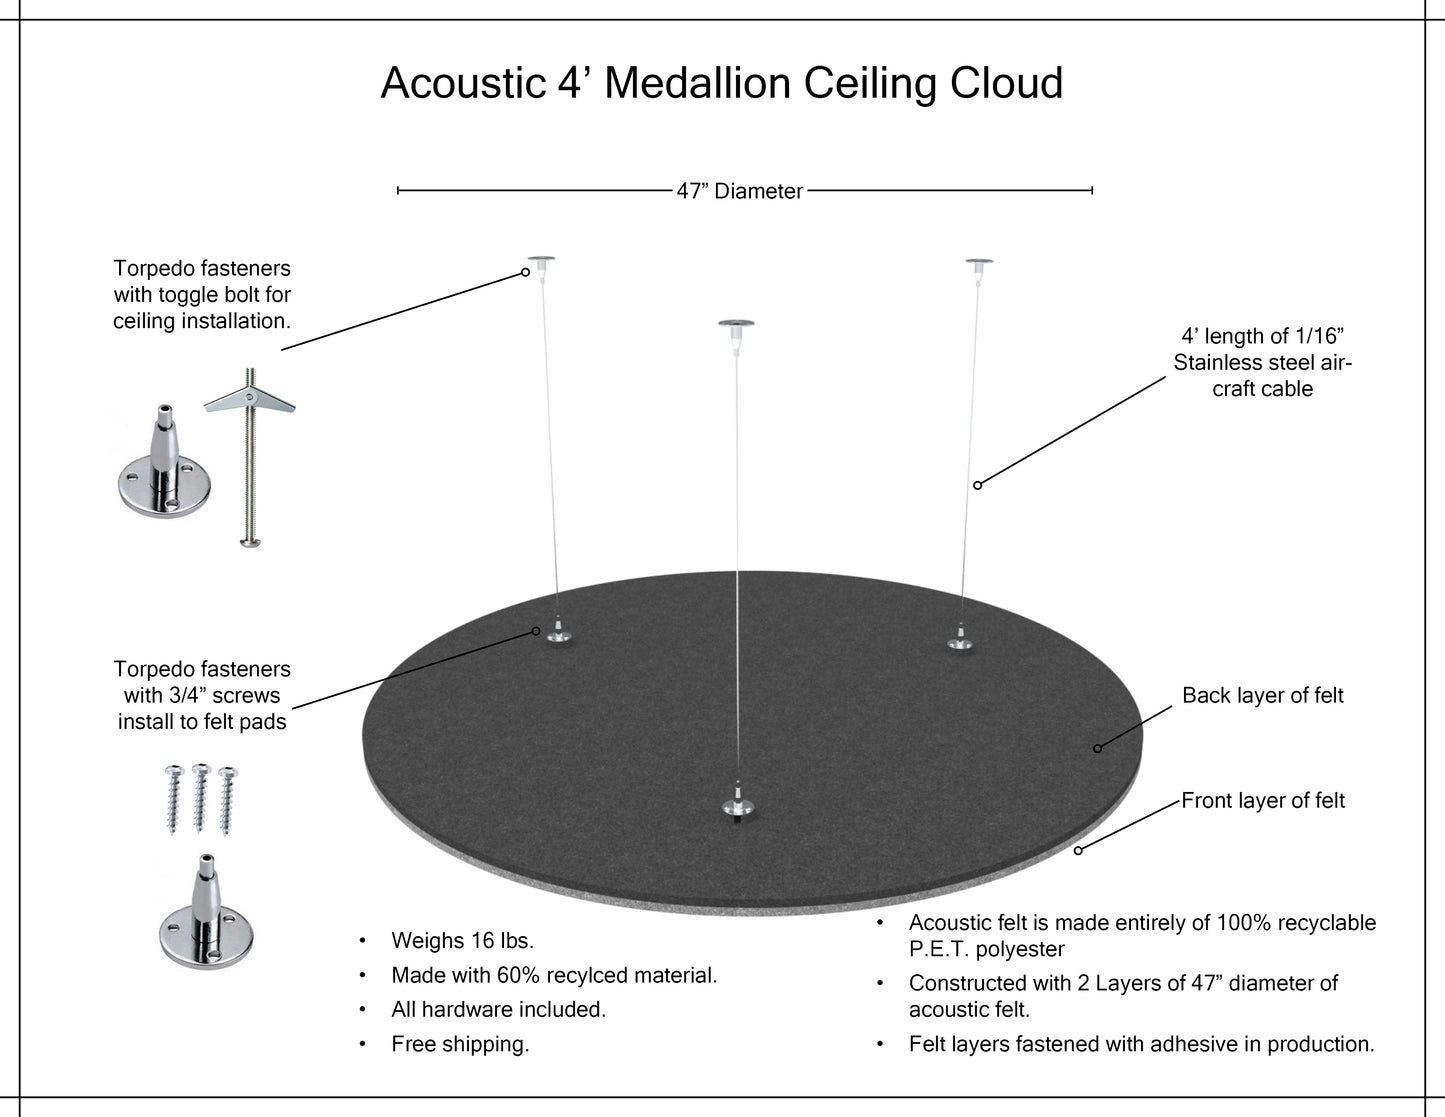 Medallion Acoustic Ceiling Cloud - Good Luck